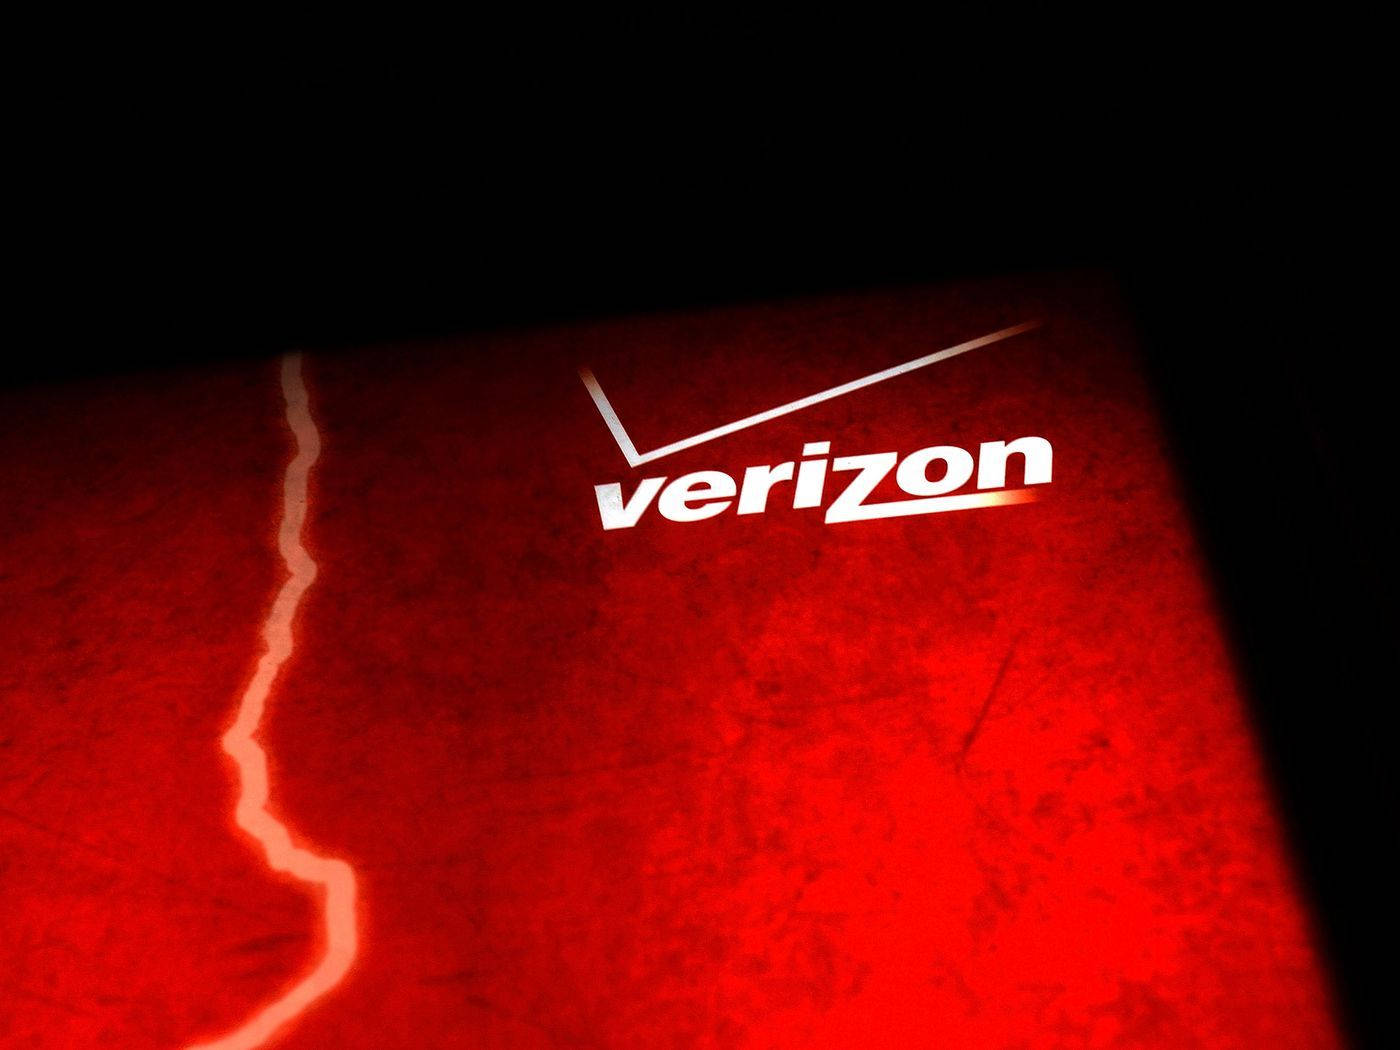 Verizon In Striking Red Background